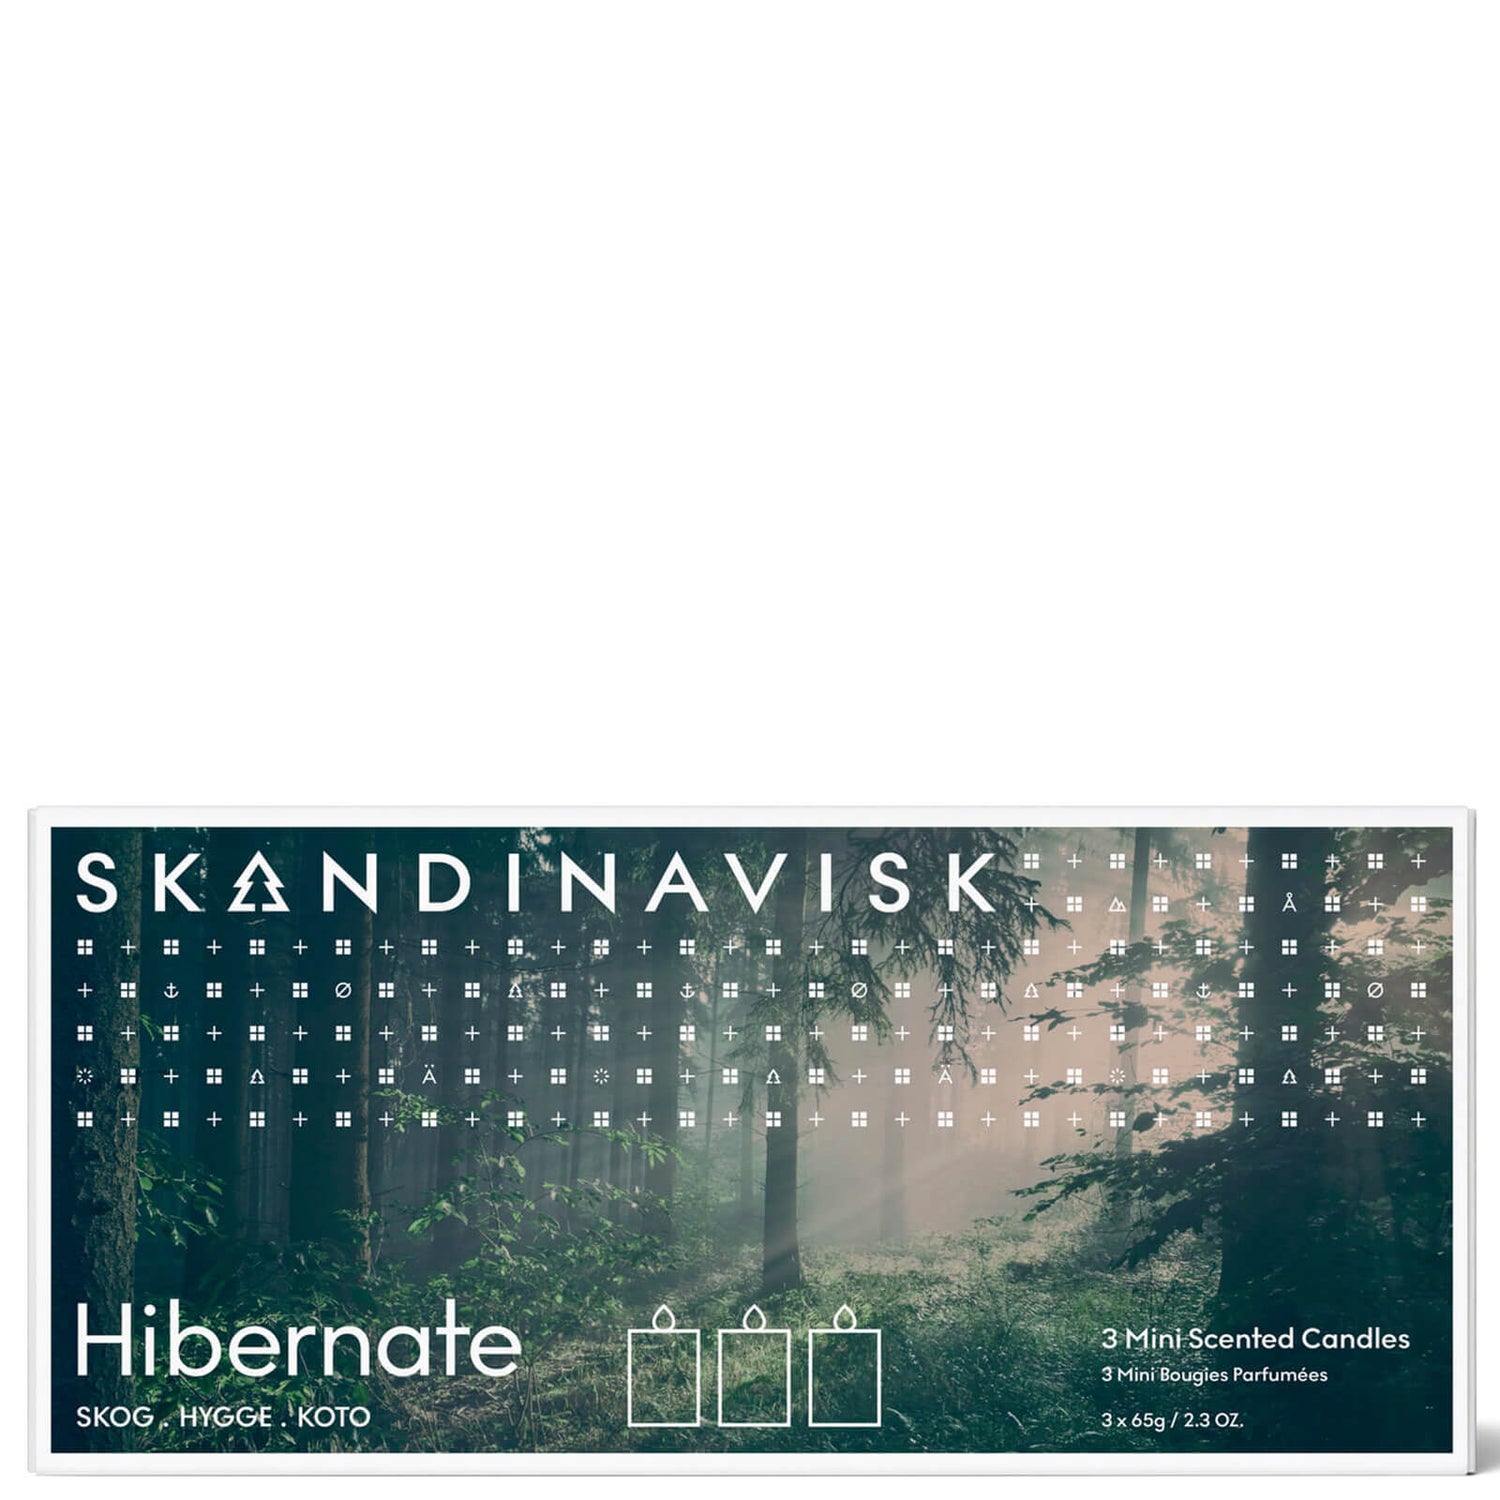 SKANDINAVISK Hibernation Gift Set - Skog - Hygge - Koto - Set of 3